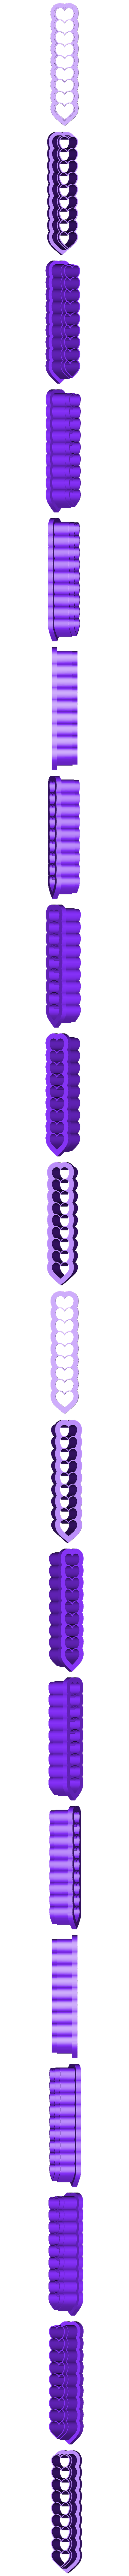 valentine hoop with hearts 65mm.stl Download STL file Valentine Hoop with Hearts Polymer Clay Cutter | Digital STL File | 4 Sizes | 2 Cutter Versio • 3D printer template, socrates_z